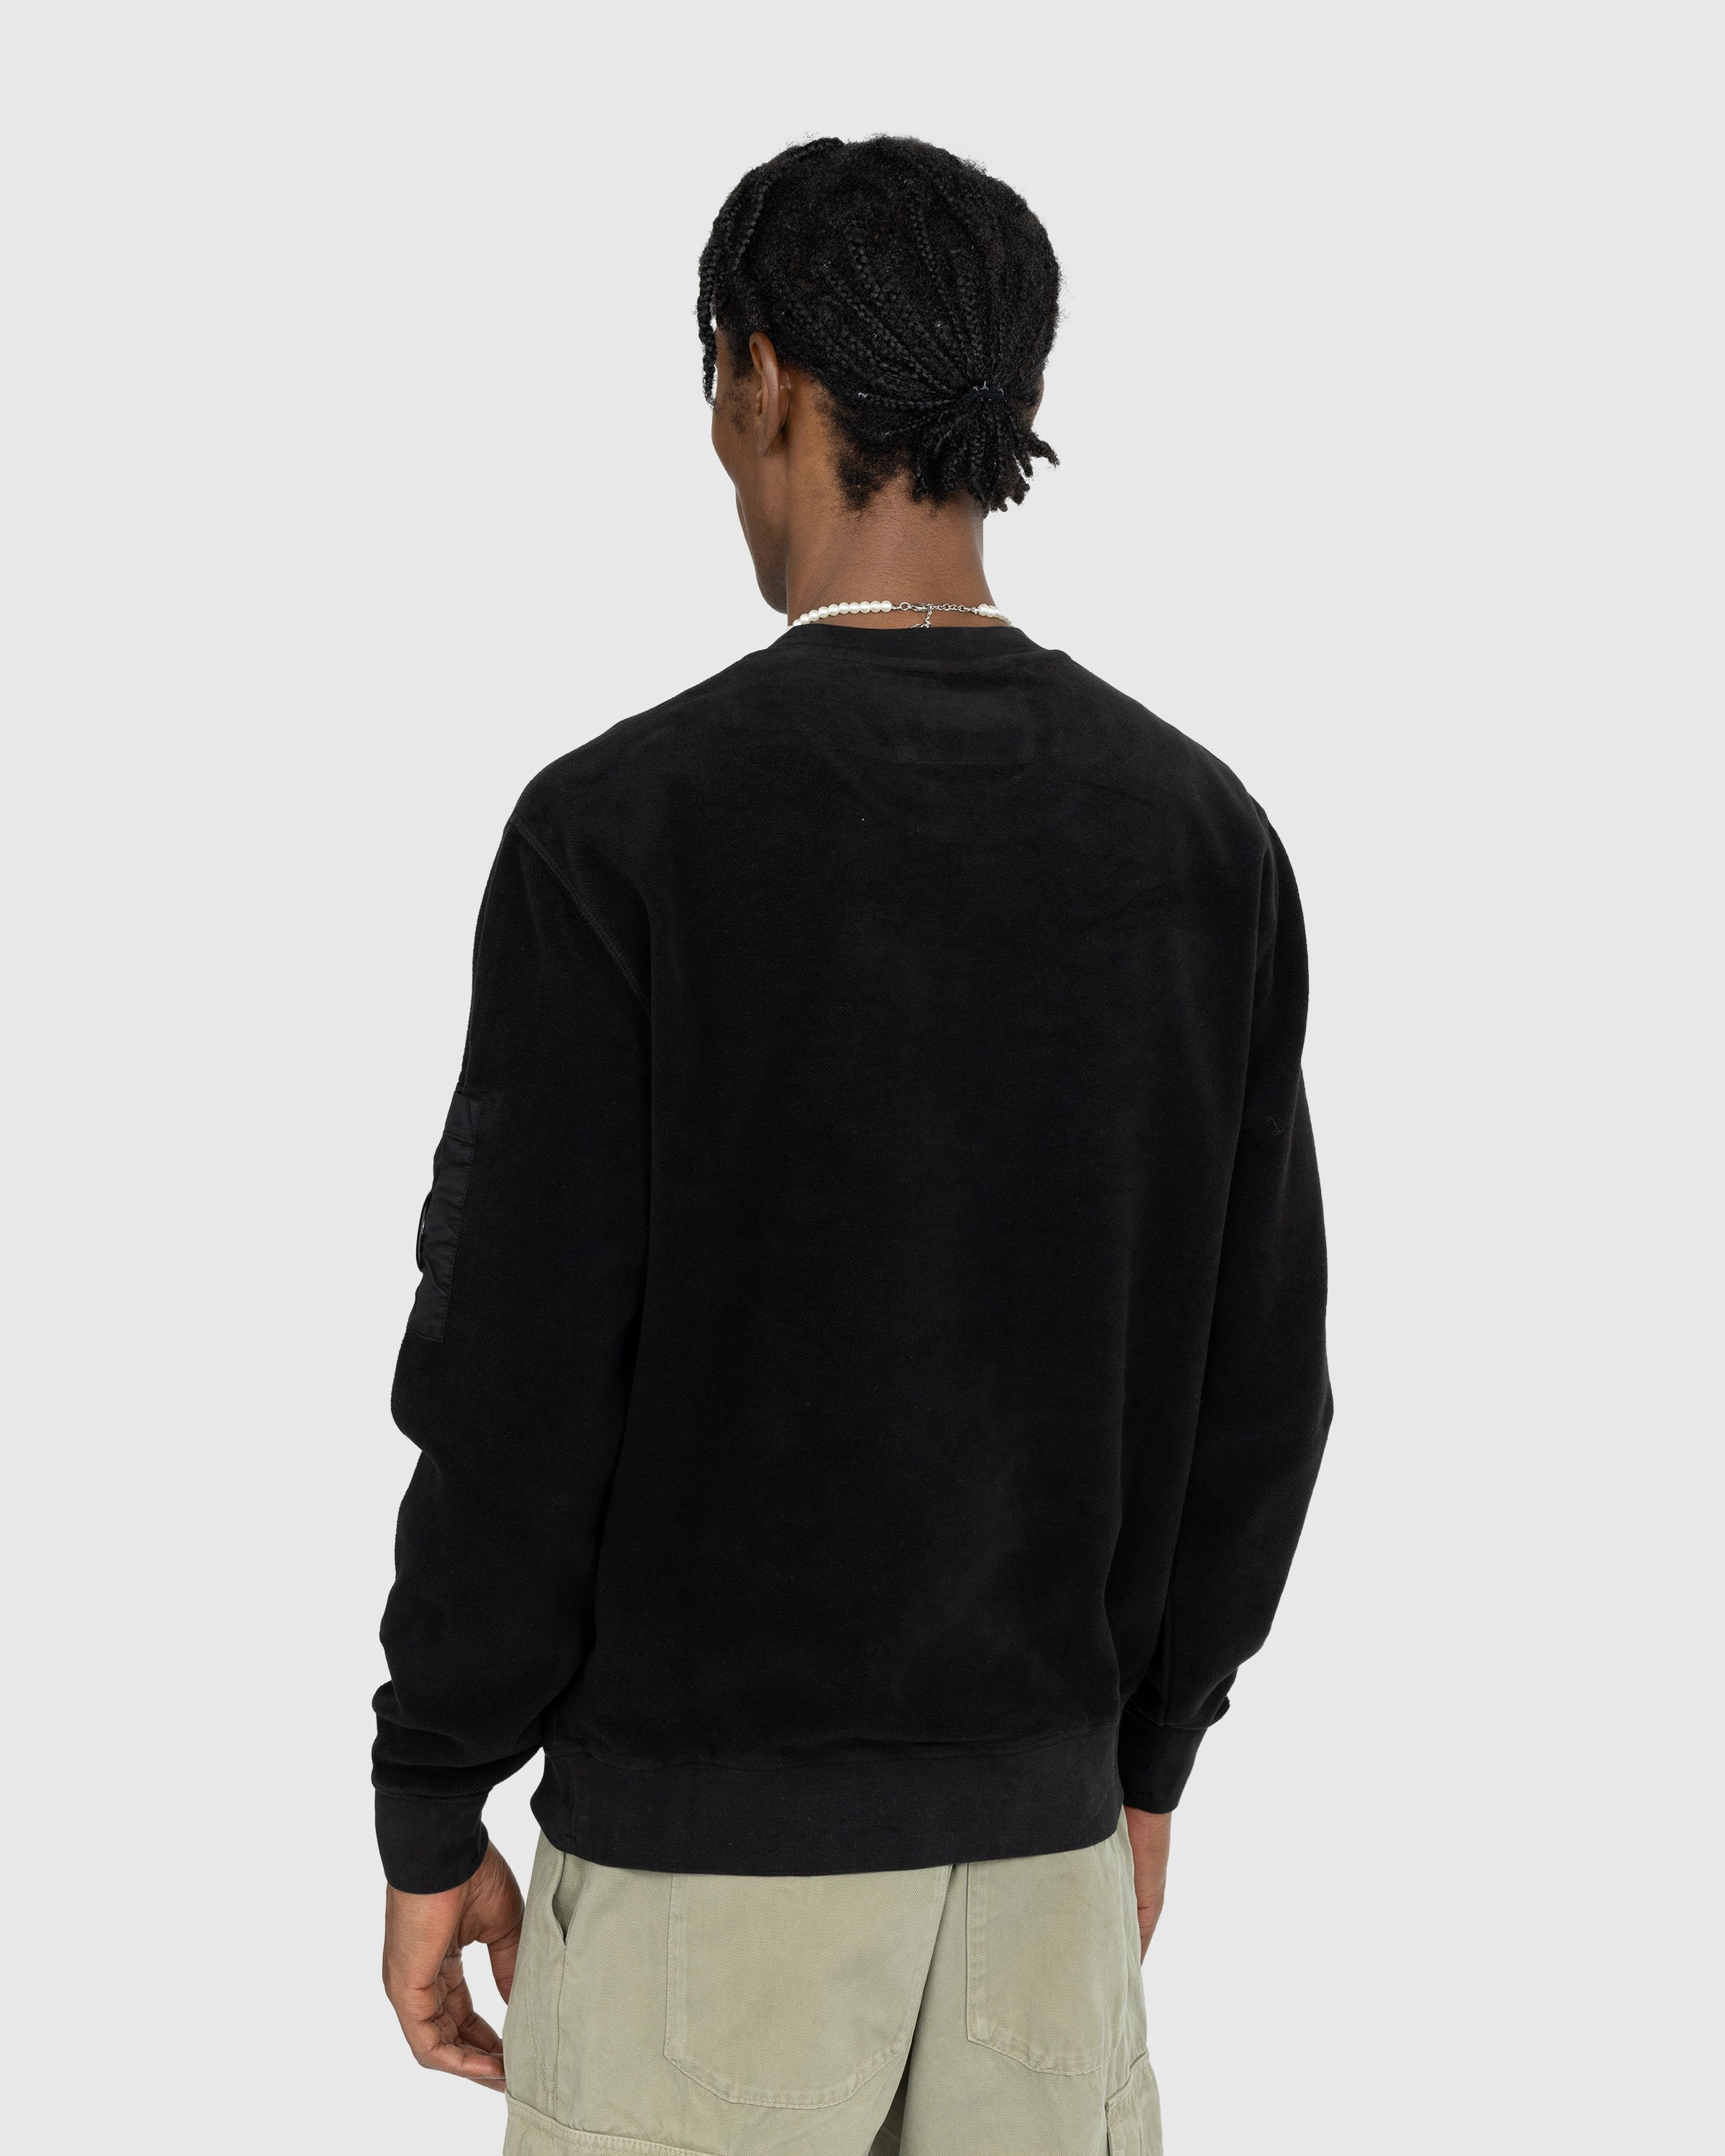 C.P. Company - Sweatshirts - Crew Neck - Clothing - Black - Image 3